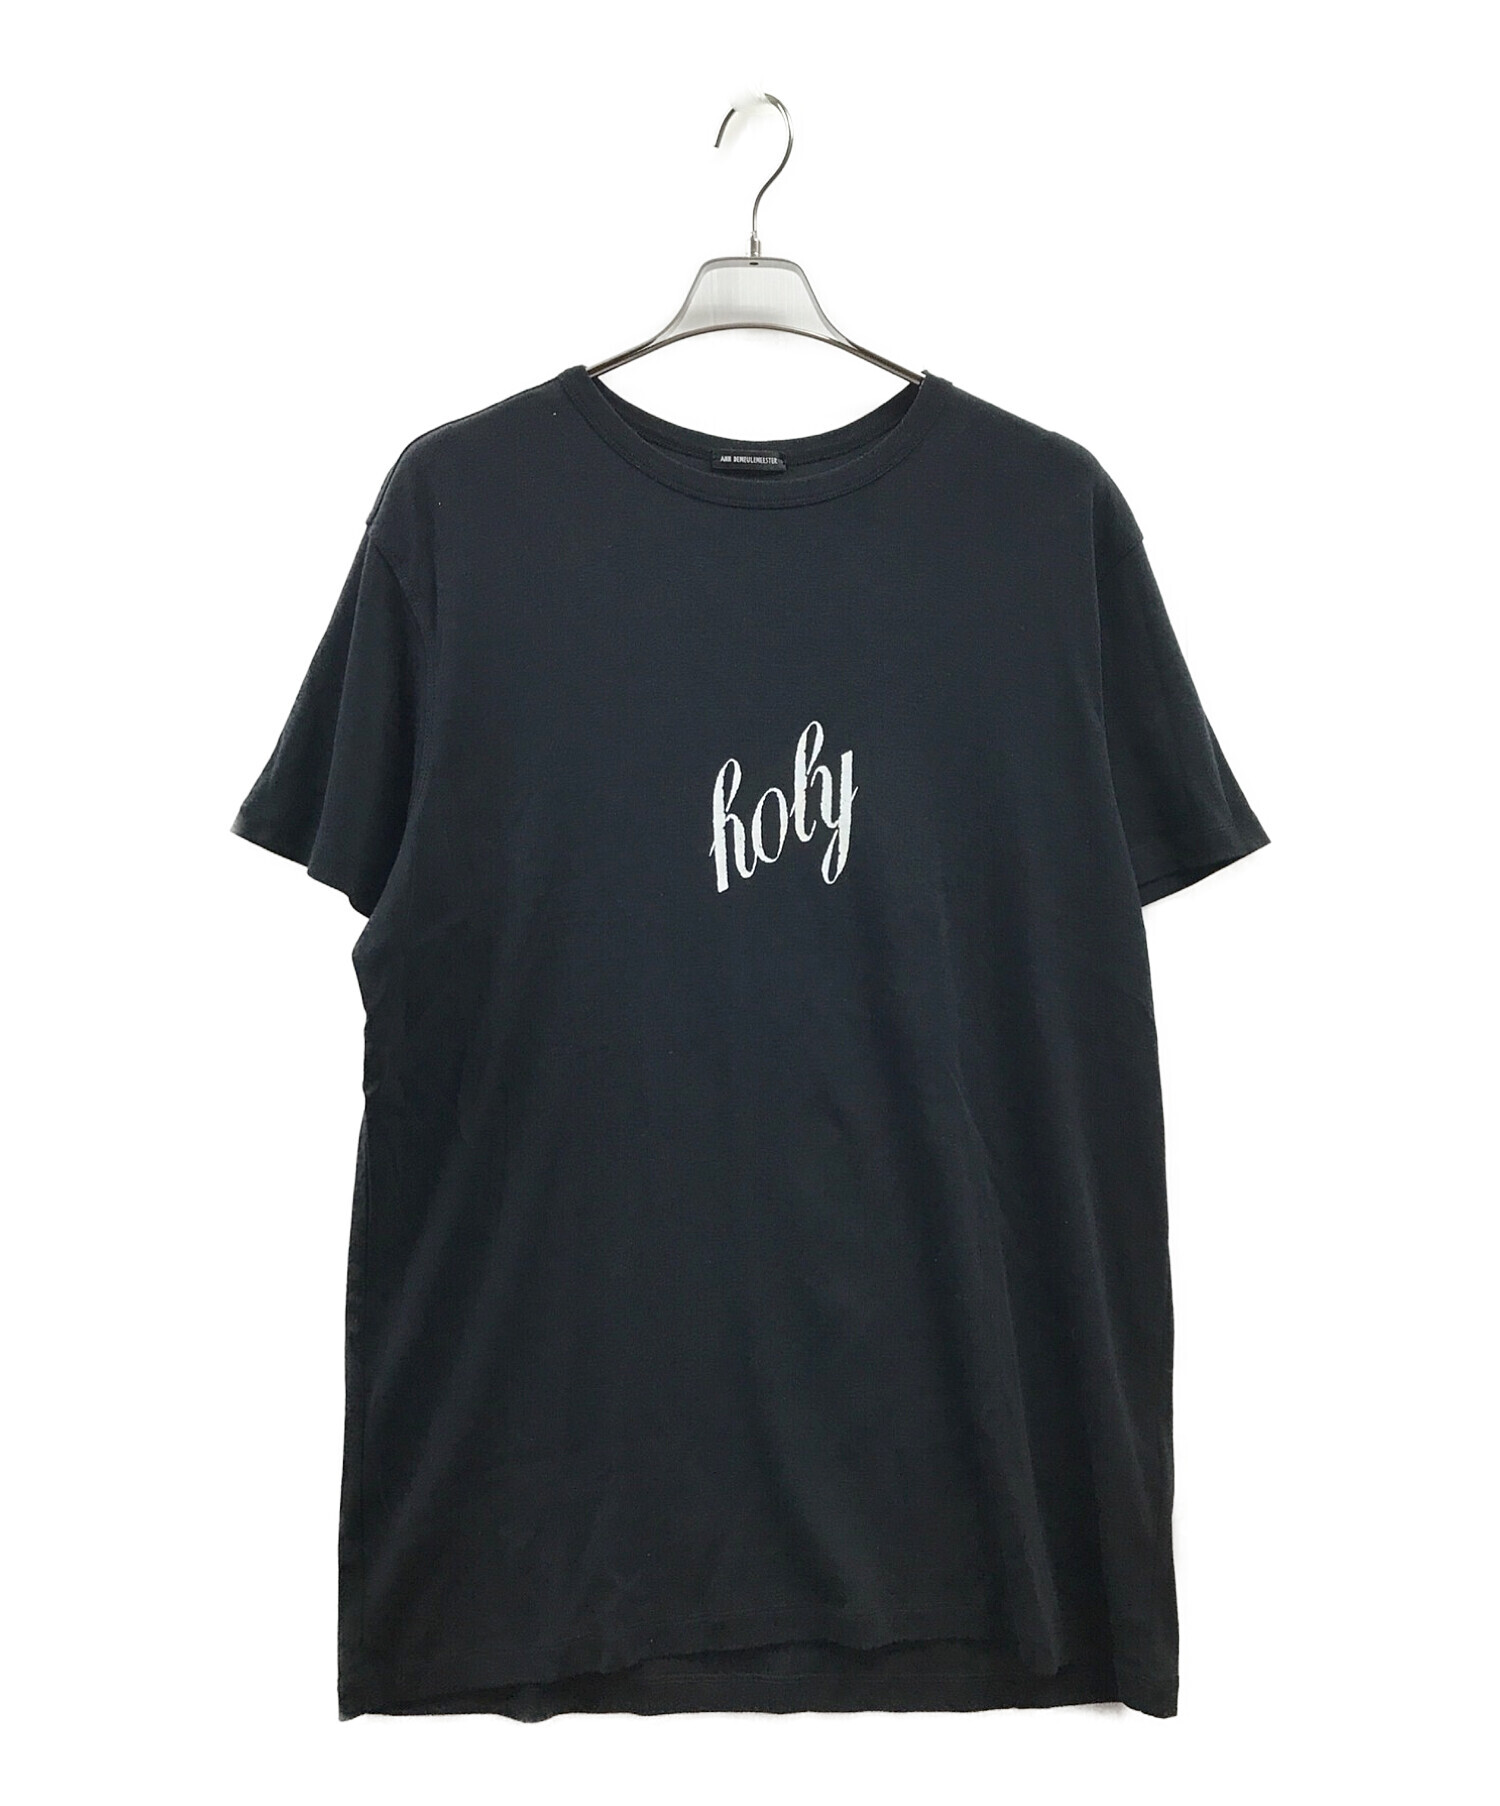 ANN DEMEULEMEESTER (アンドゥムルメステール) holy print cotton T-shirt ブラック サイズ:S